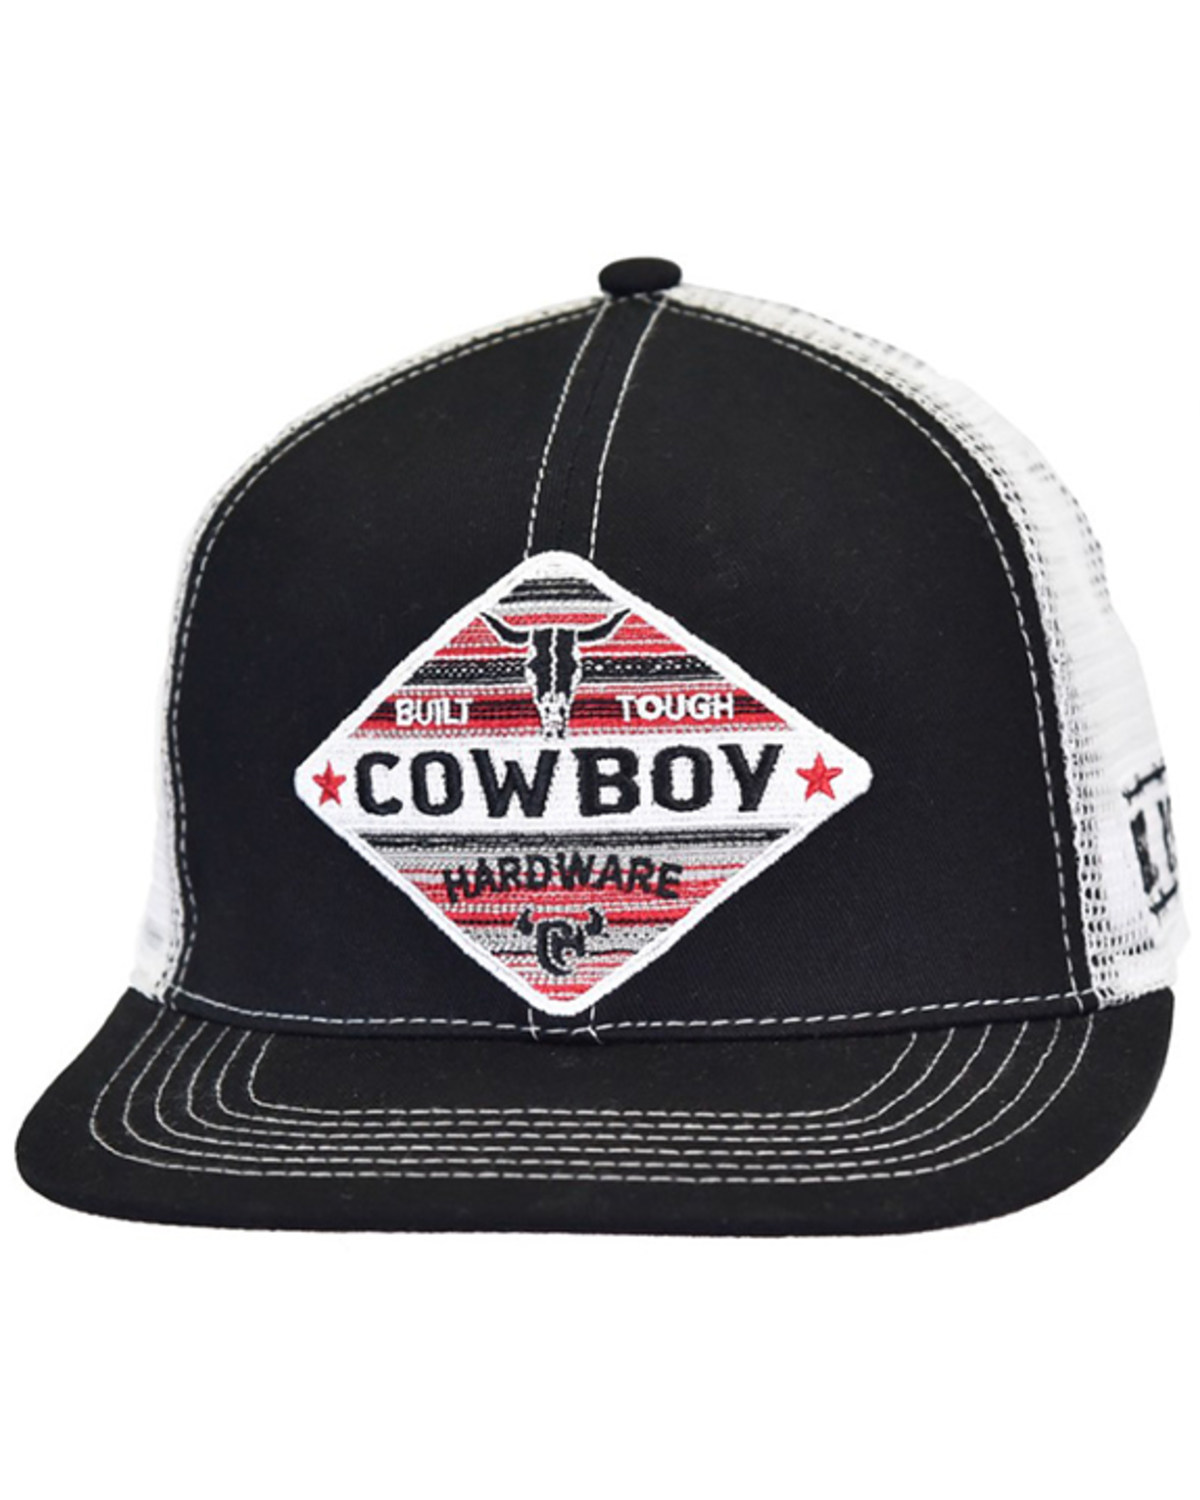 Cowboy Hardware Men's Built Tough Flat Bill Trucker Cap